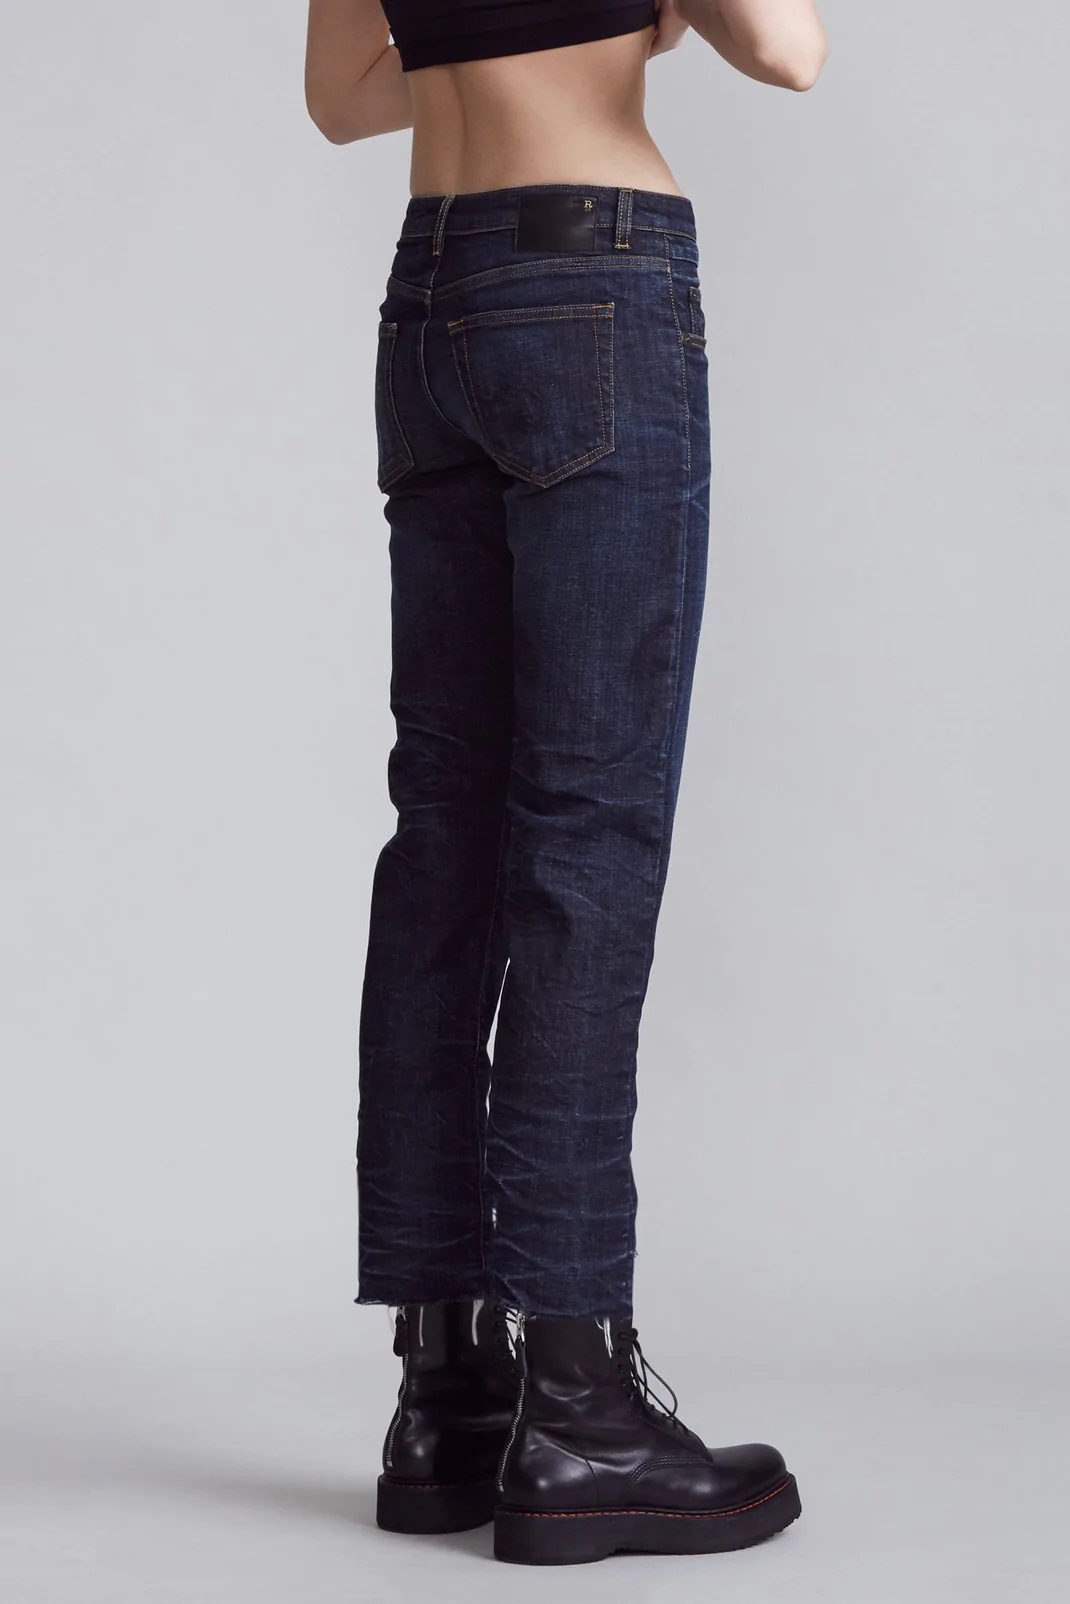 R13 Boy Straight Jeans Howell Indigo 26